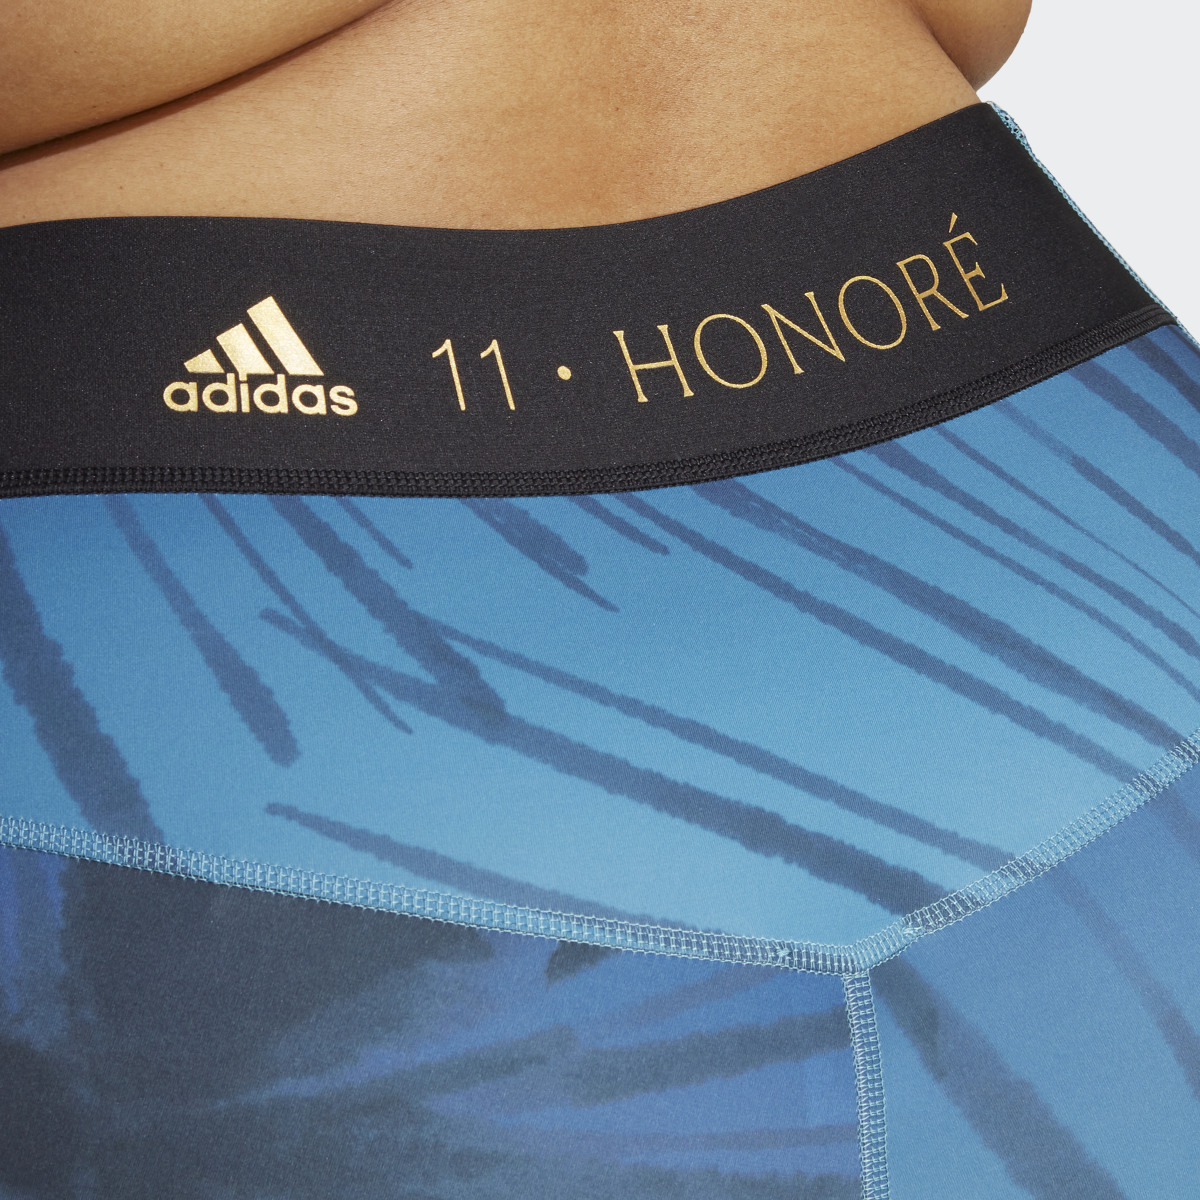 Adidas x 11 Honoré Studio Tights 7/8-Length (Plus Size). 5